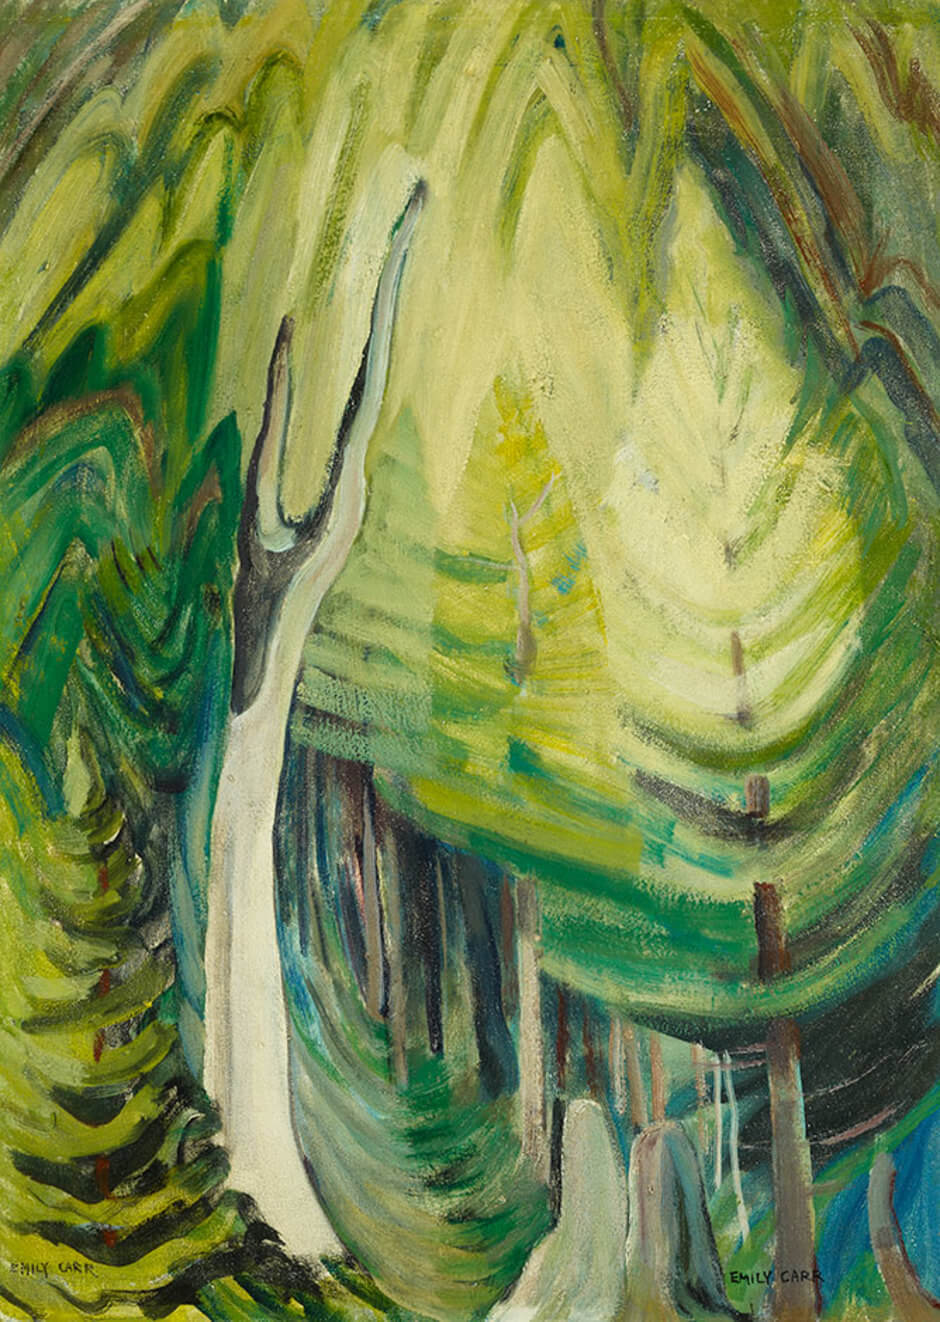 Art Canada Institute, Jock Macdonald, Young Pines in Light, Emily Carr, c. 1935